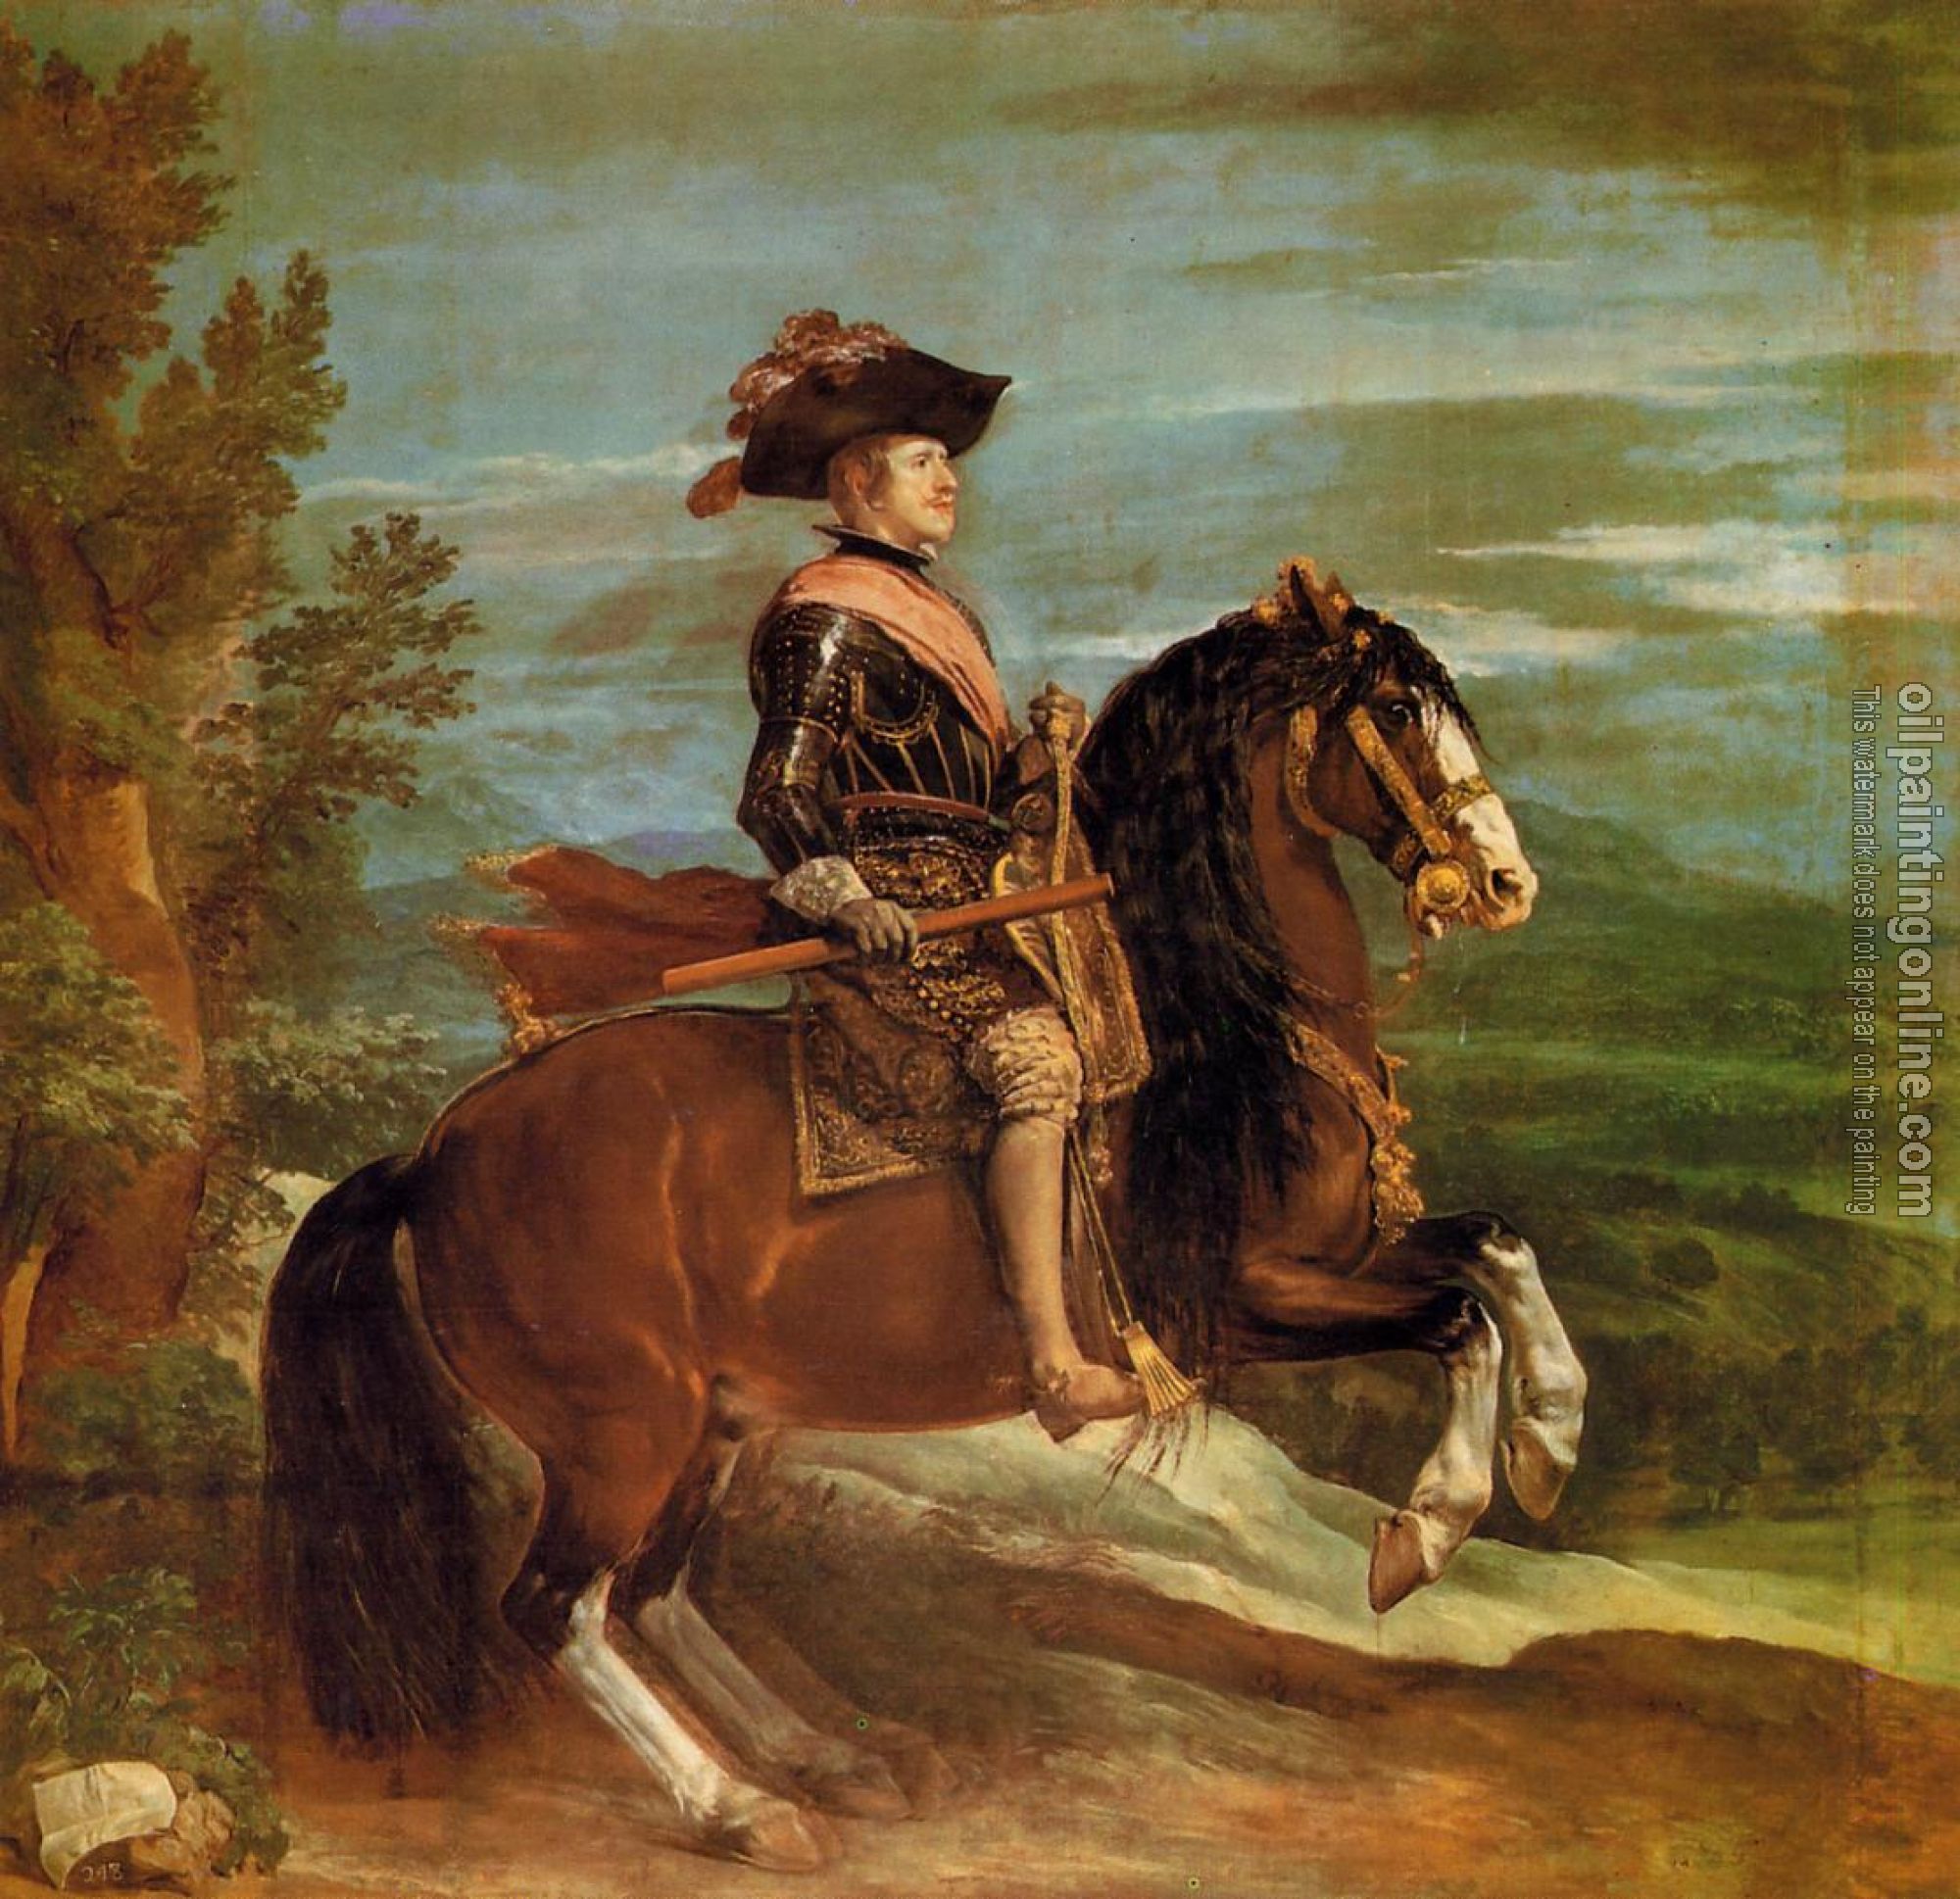 Velazquez, Diego Rodriguez de Silva - Philip IV on Horseback